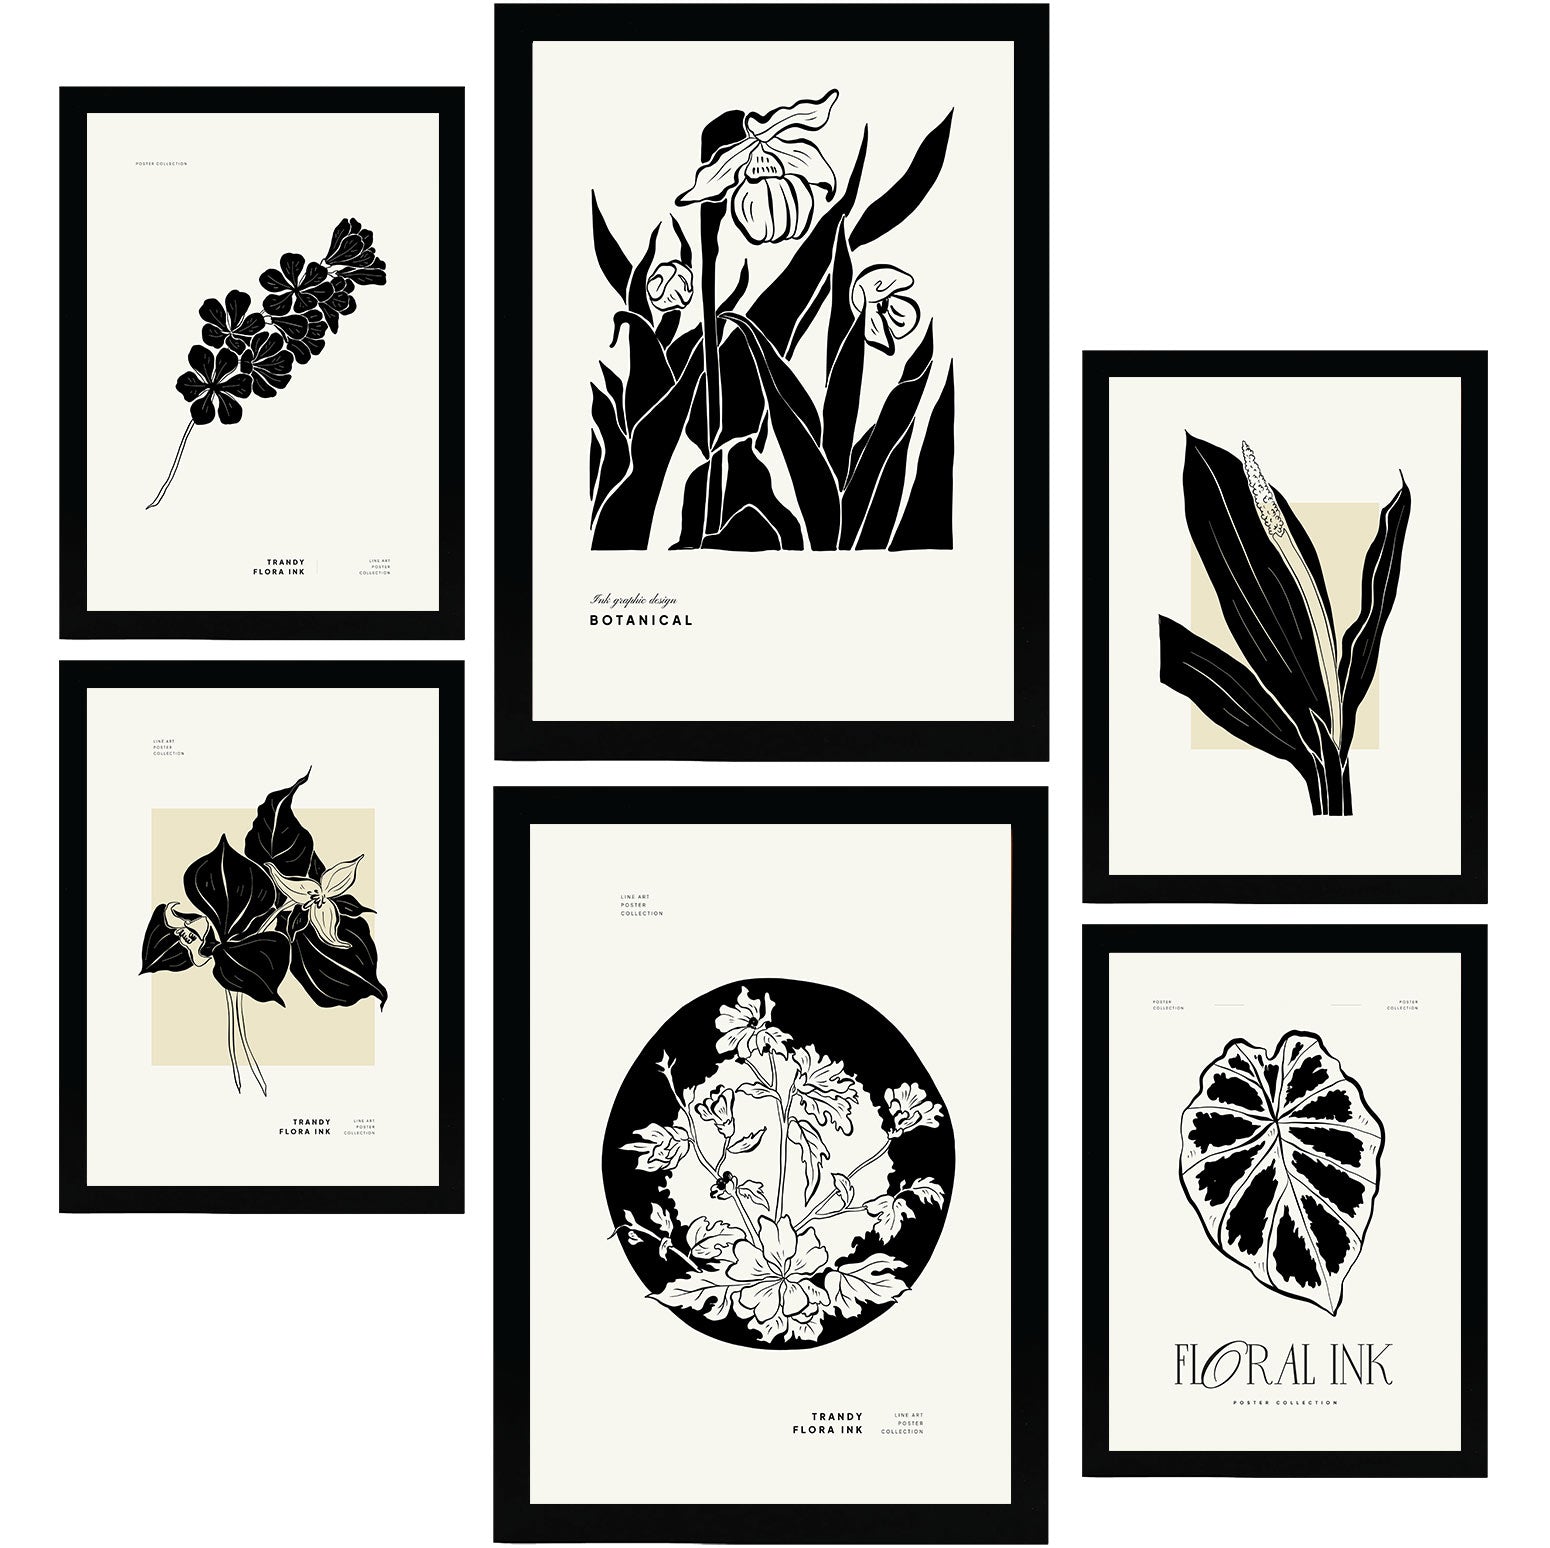 Thick Black Ink Posters. Tropical Inks.-Artwork-Nacnic-Nacnic Estudio SL